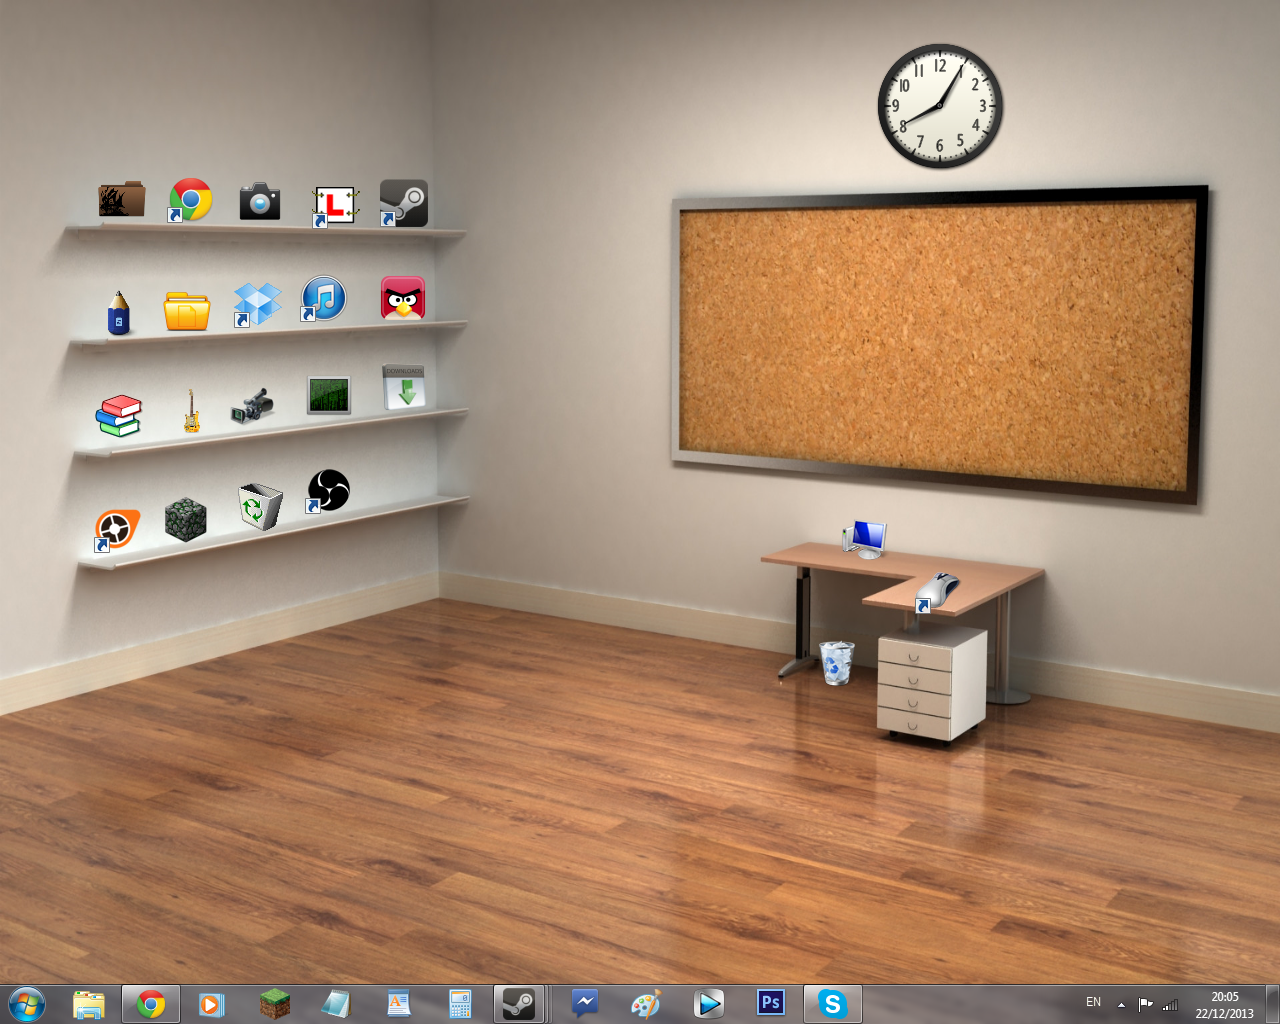 My desktop after seeing that sweet game shelf background gaming